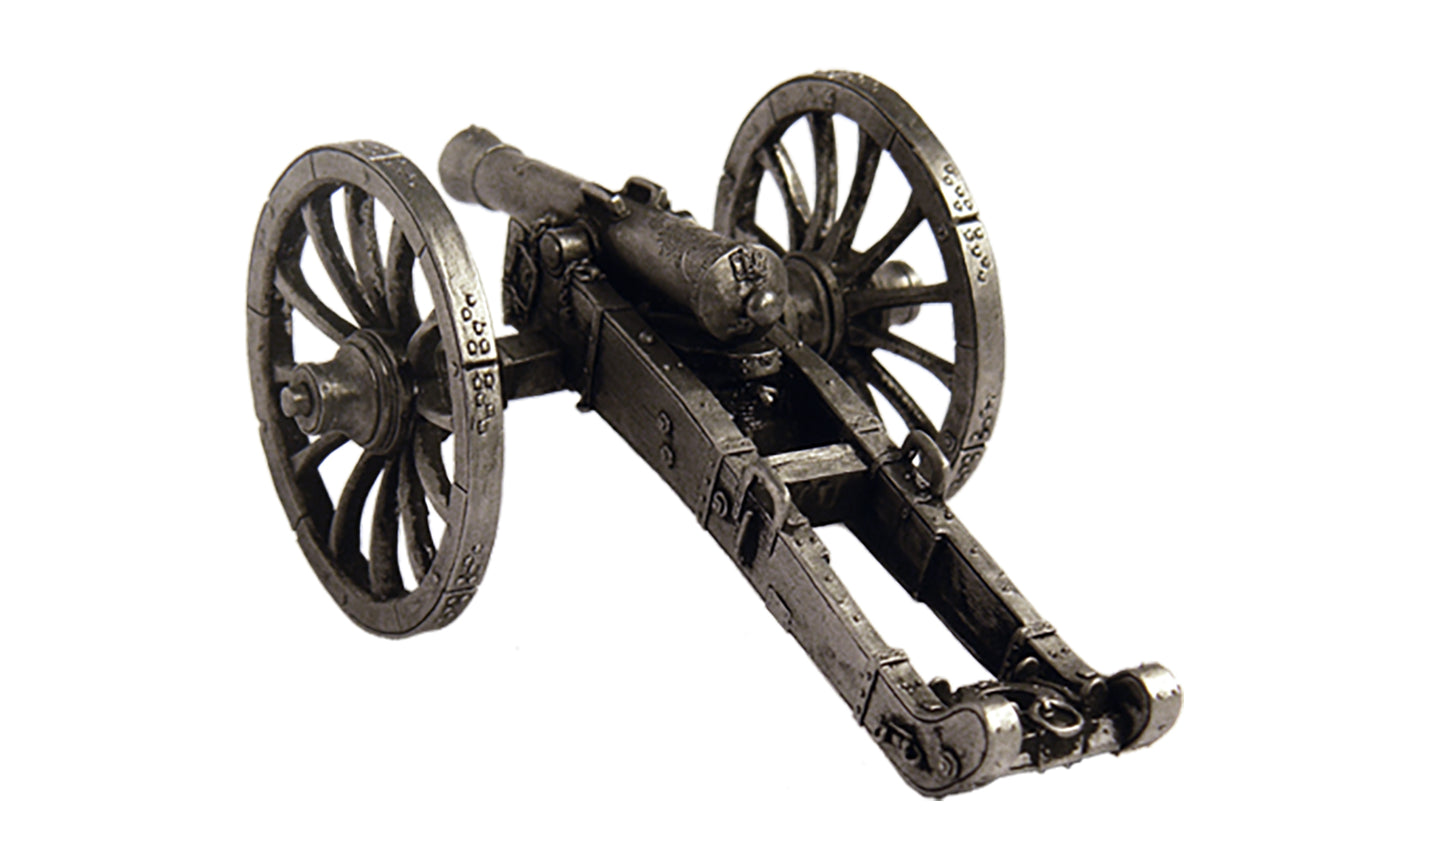 EK-AR05 - 6-фунтовая пушка системы XI года. Франция, 1803-1815 гг.